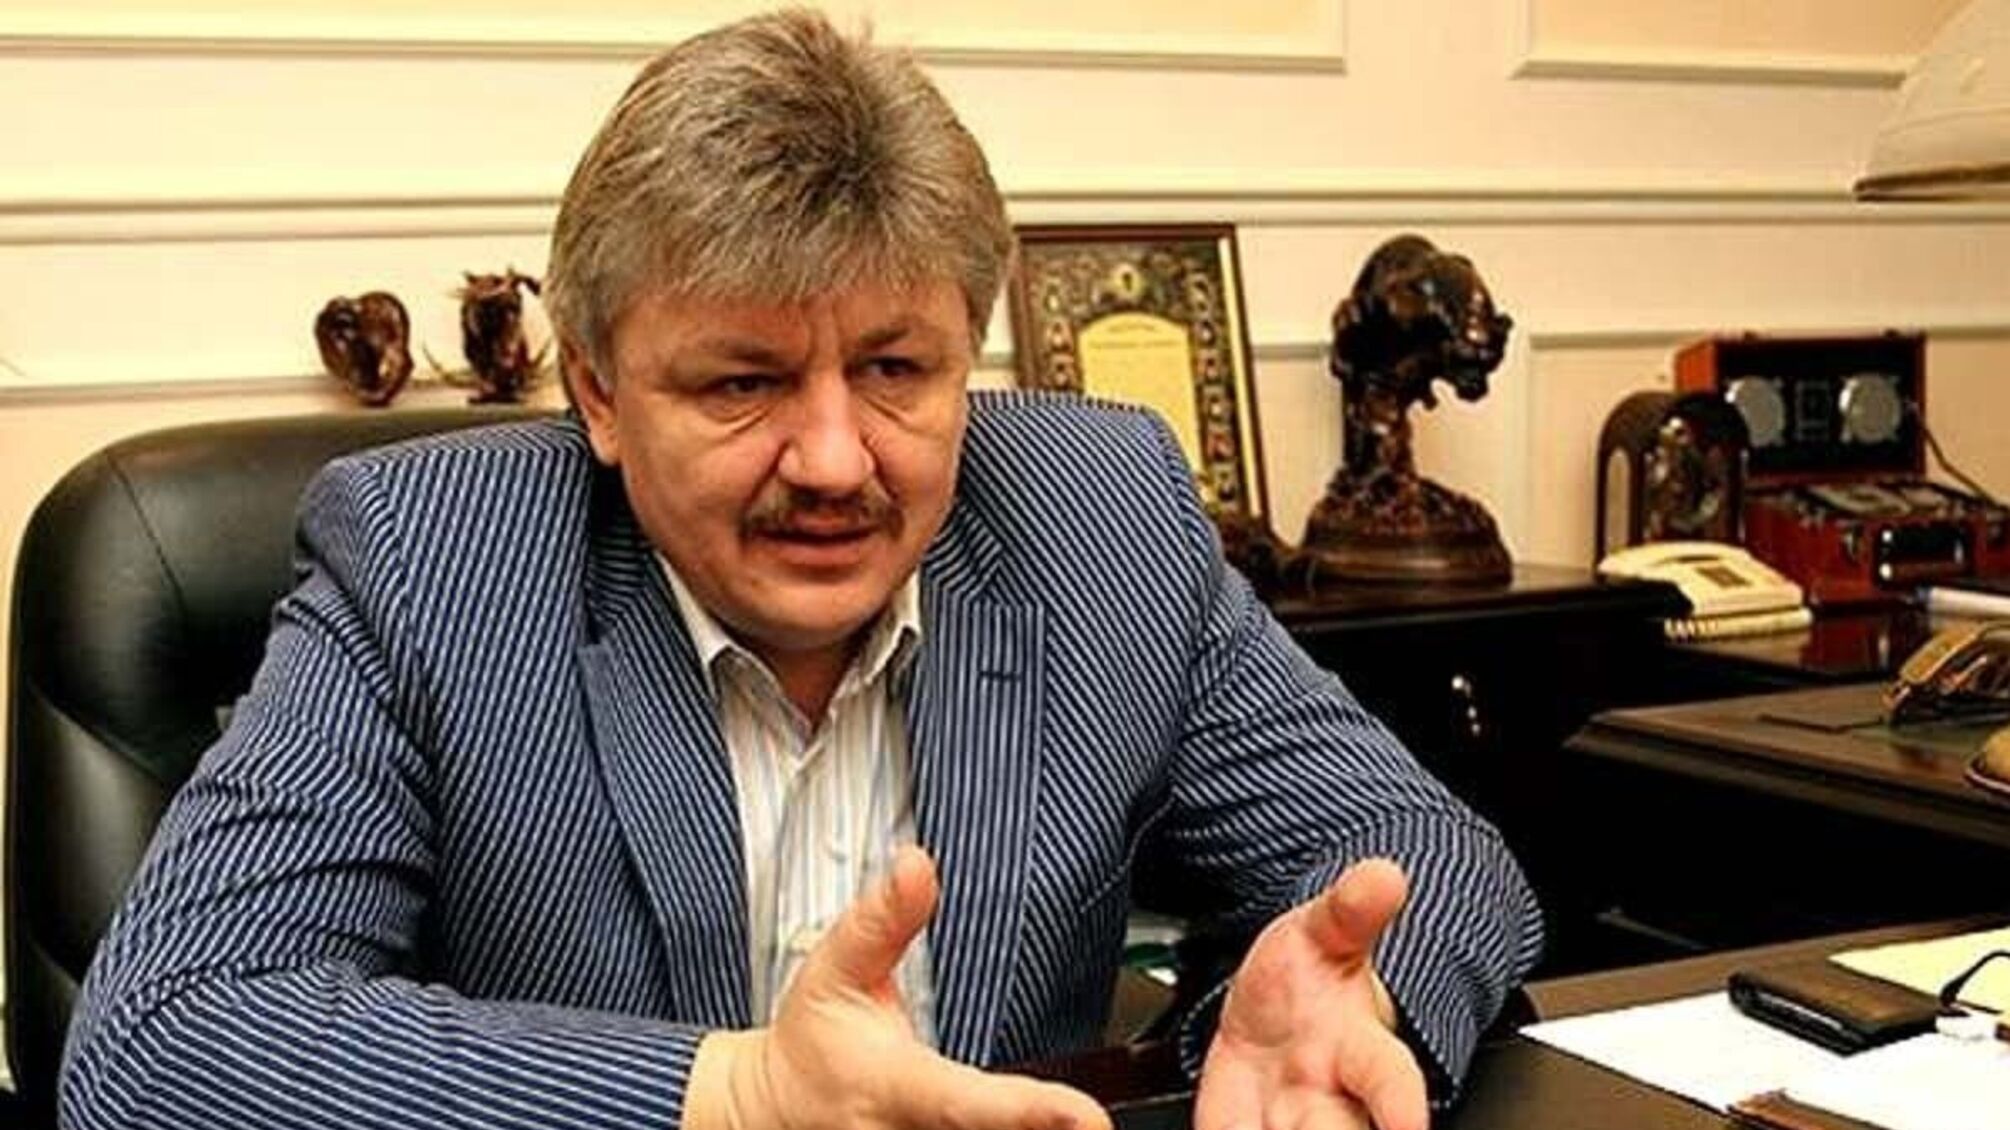 Сивковича подозревают в сотрудничестве с ФСБ и дестабилизации ситуации в Украине